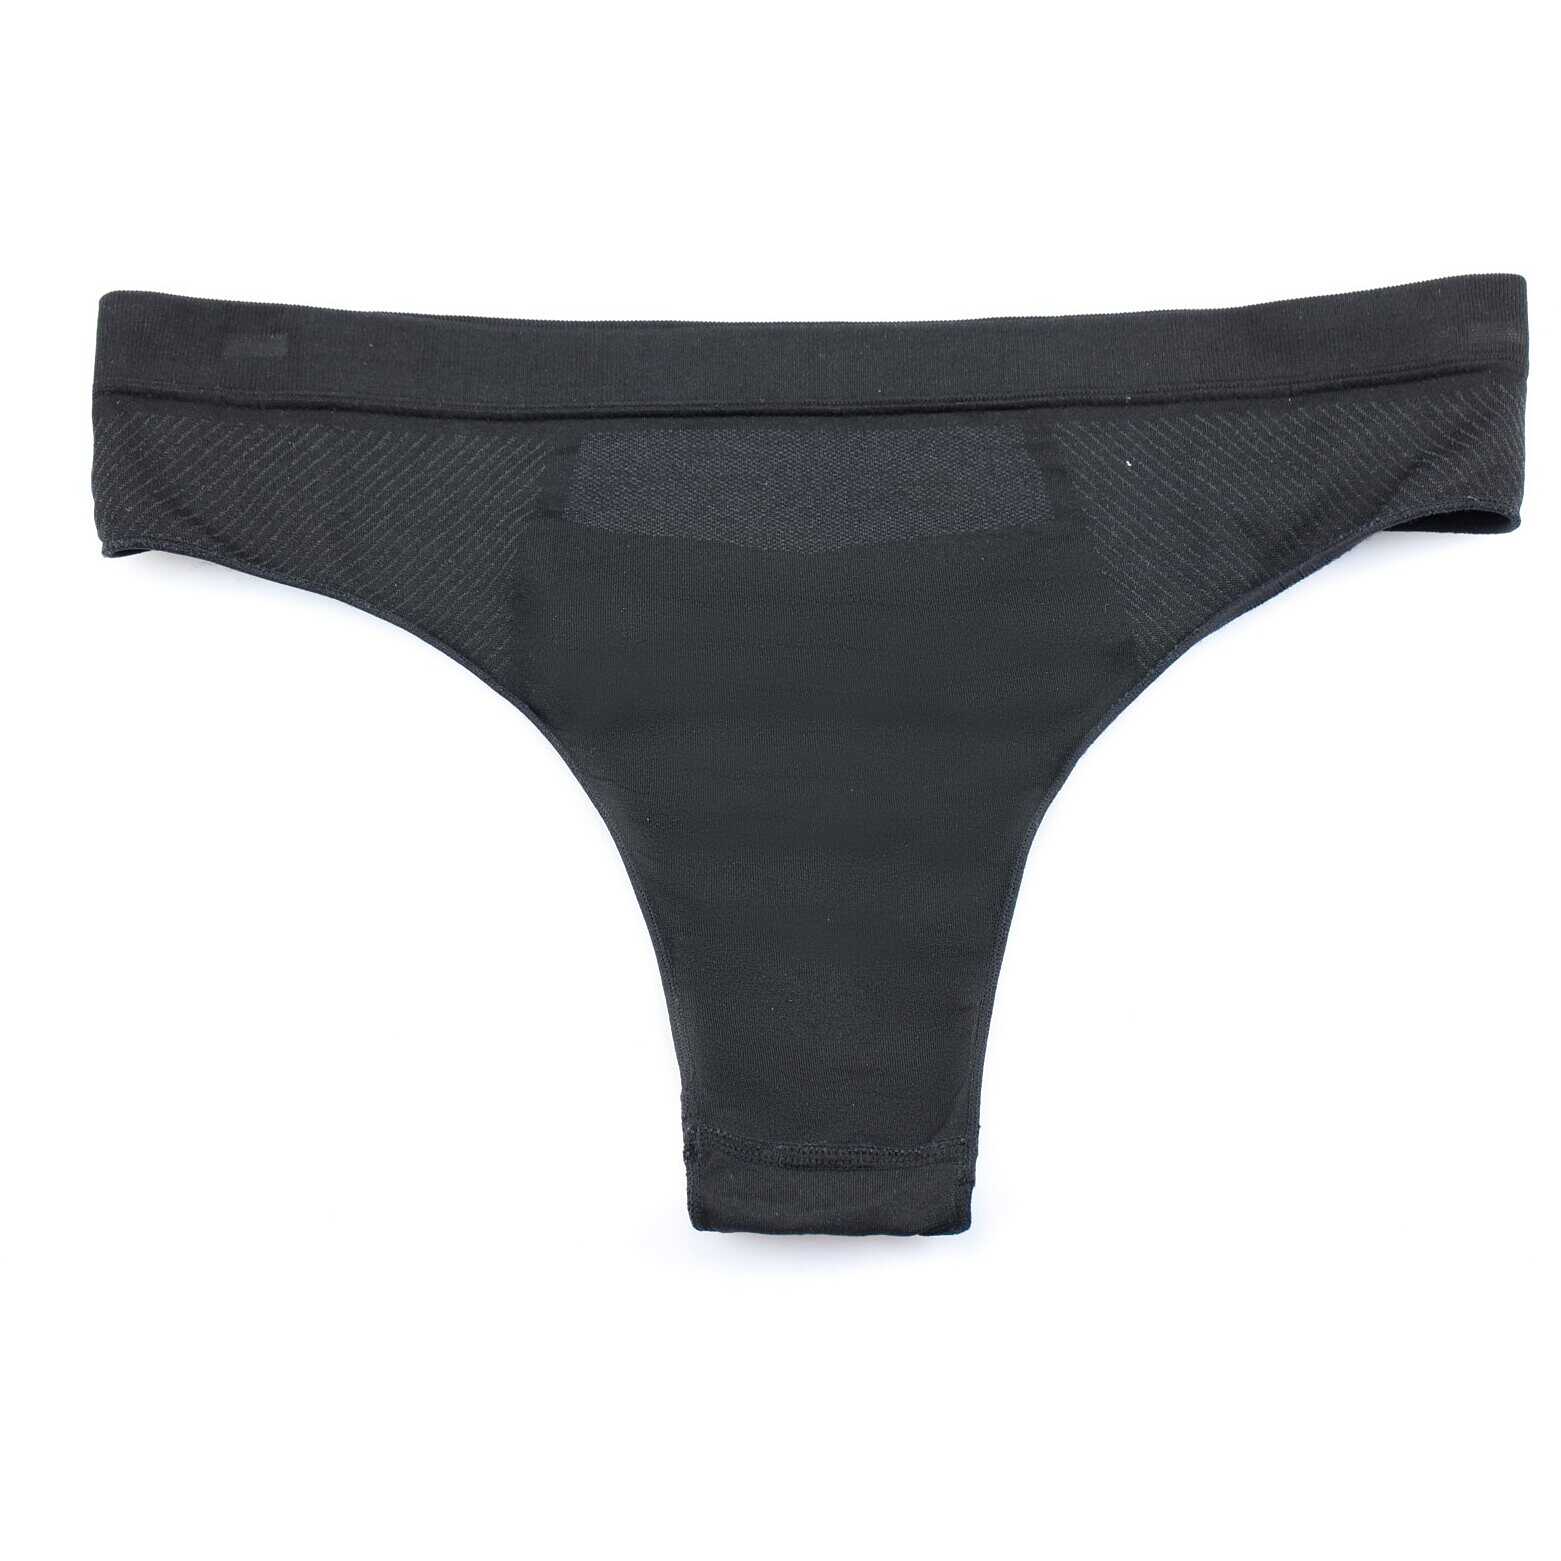 Dainese QUICK DRY Women's Underwear Pants Black For Sale Online 